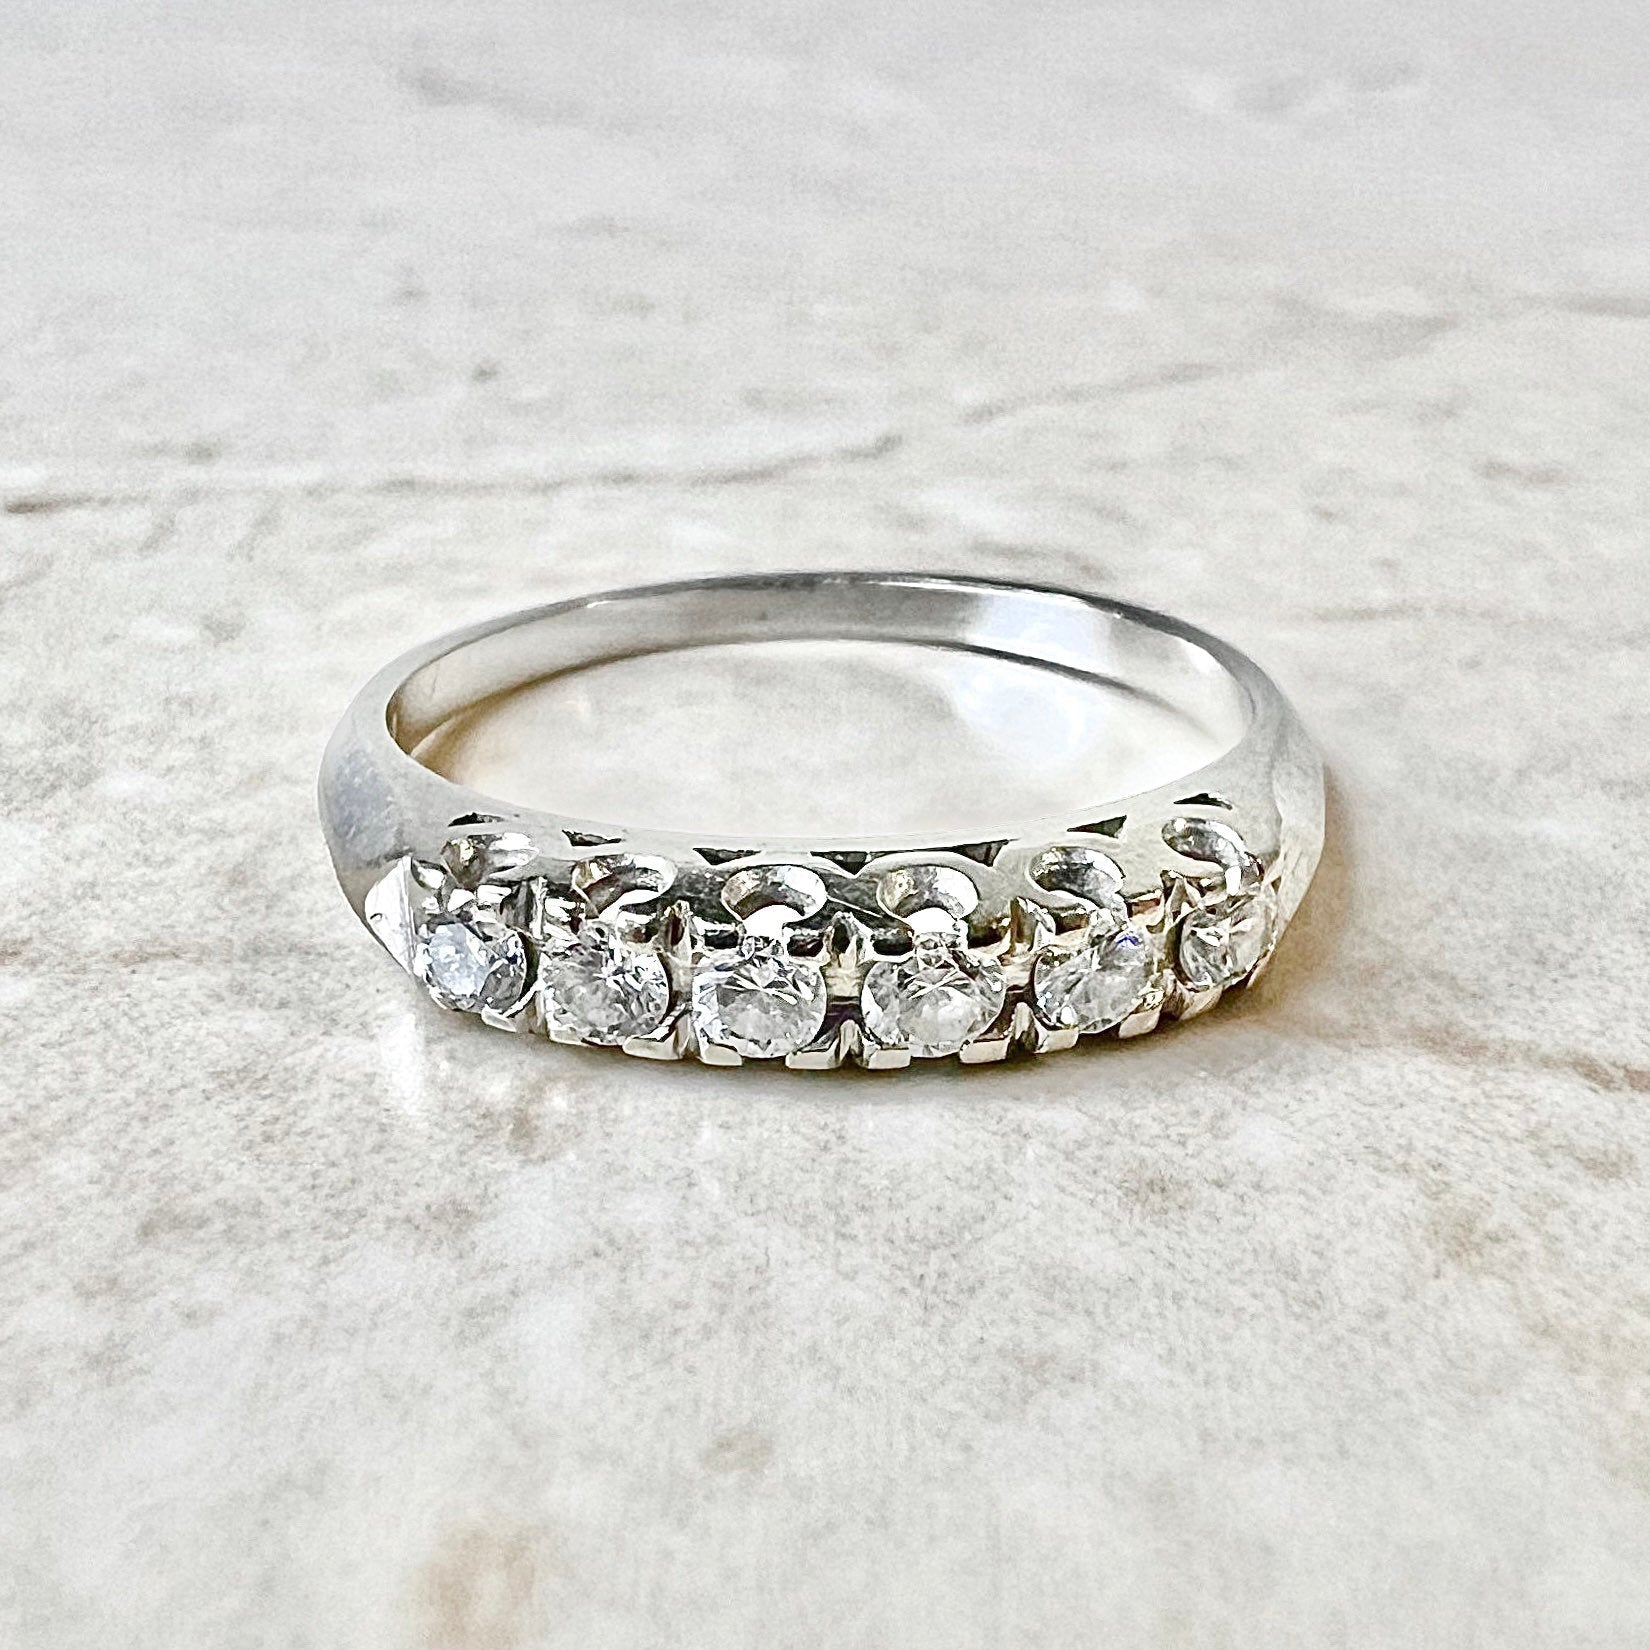 Vintage 14K Diamond Band Ring - White Gold Diamond Ring - 6 Stone Band - Anniversary Ring - Gold Diamond Wedding Ring - Stackable Ring